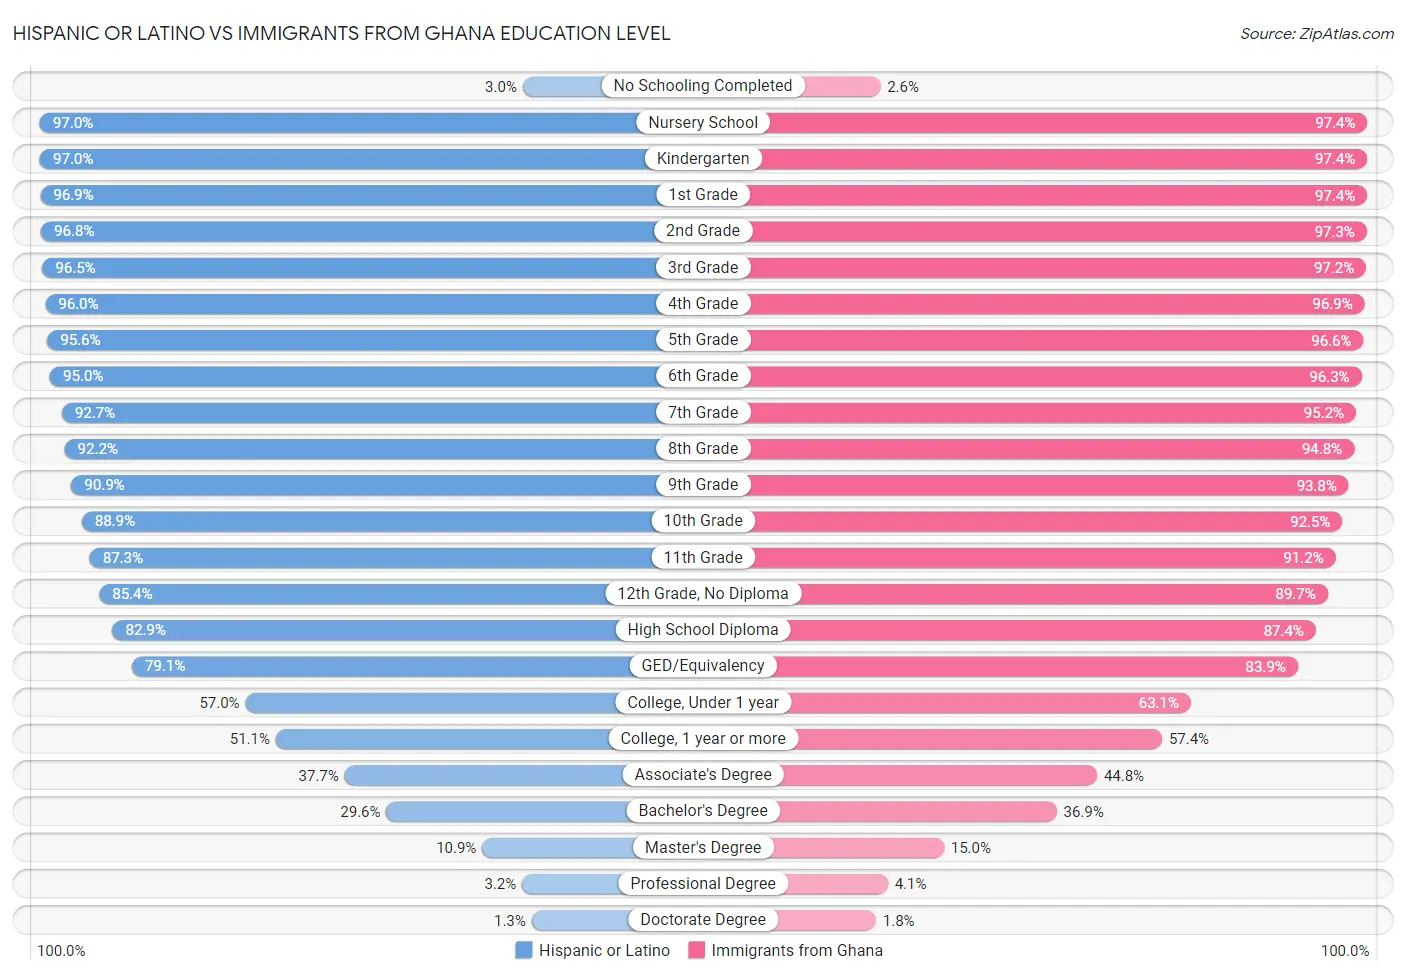 Hispanic or Latino vs Immigrants from Ghana Education Level